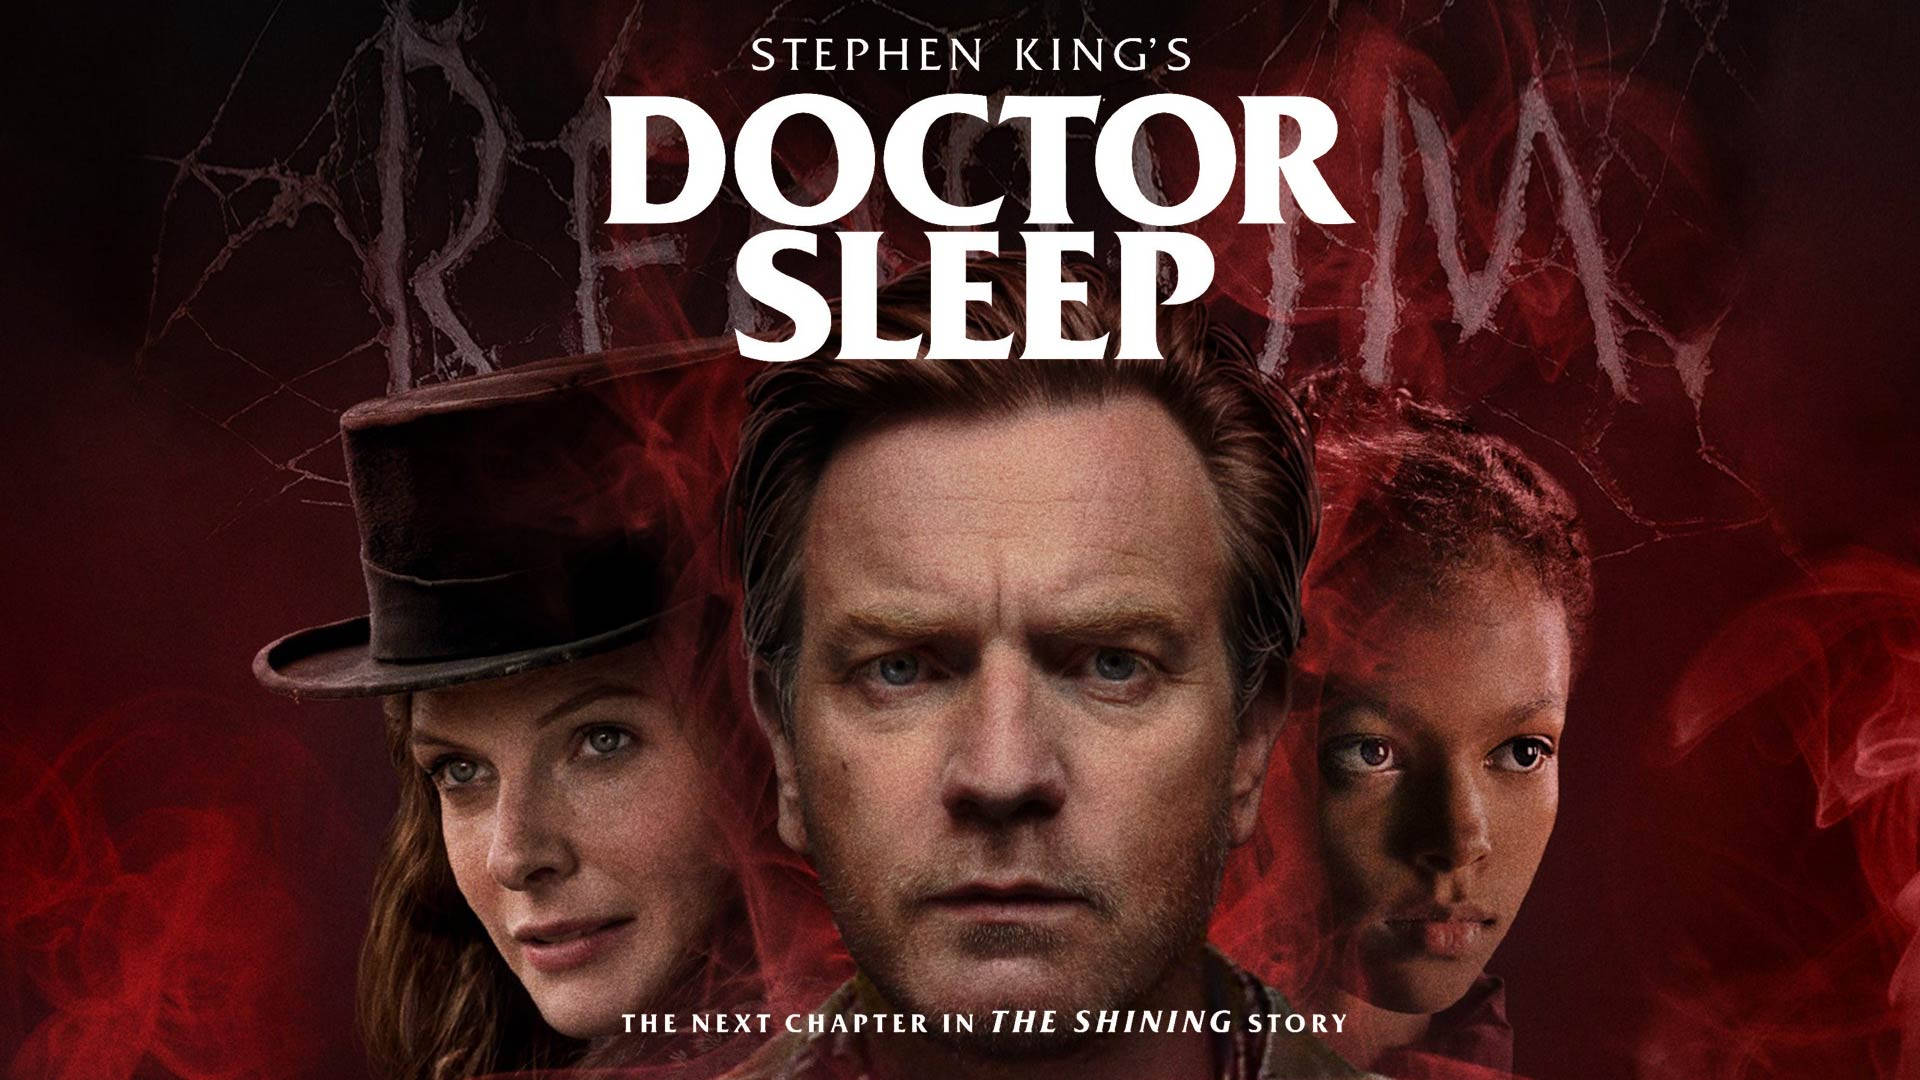 The Shining Doctor Sleep Sequel Background